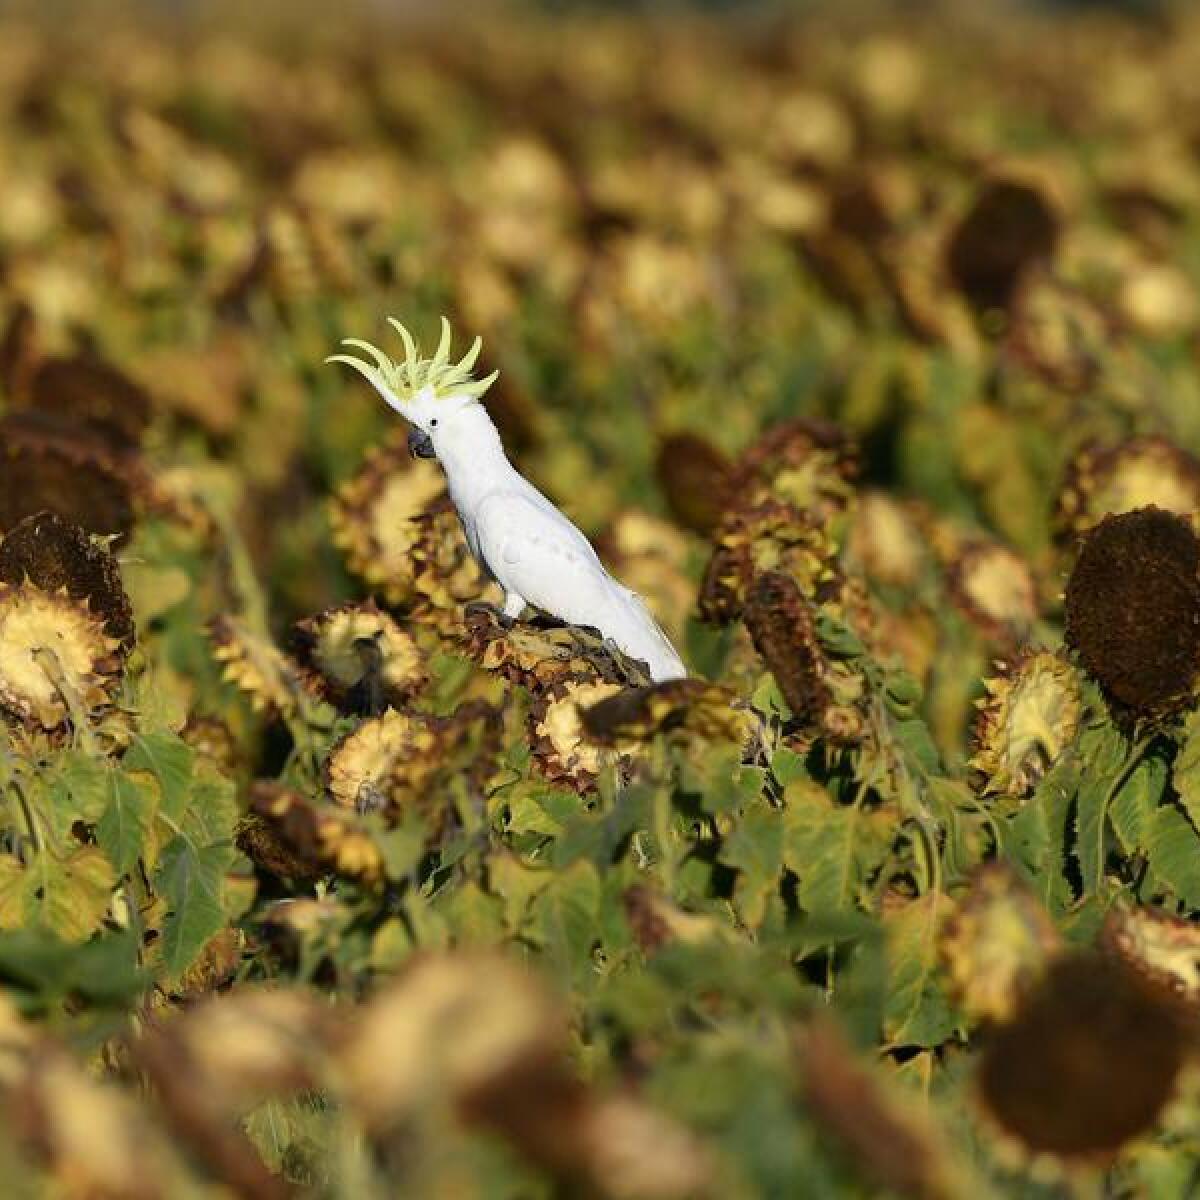 A cockatoo inn a sunflower crop in Queensland (file image)